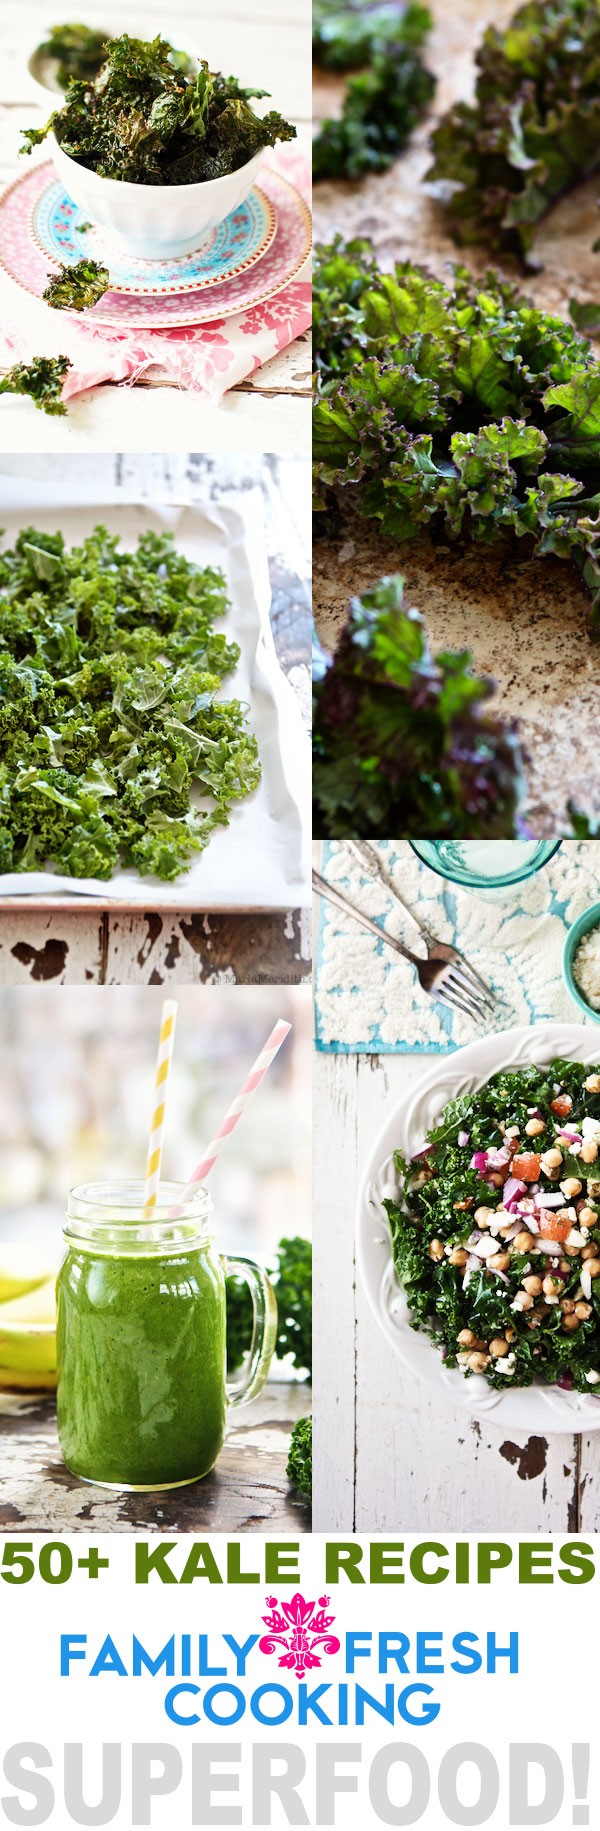 50+ AMAZING Kale Recipes | MarlaMeridith.com